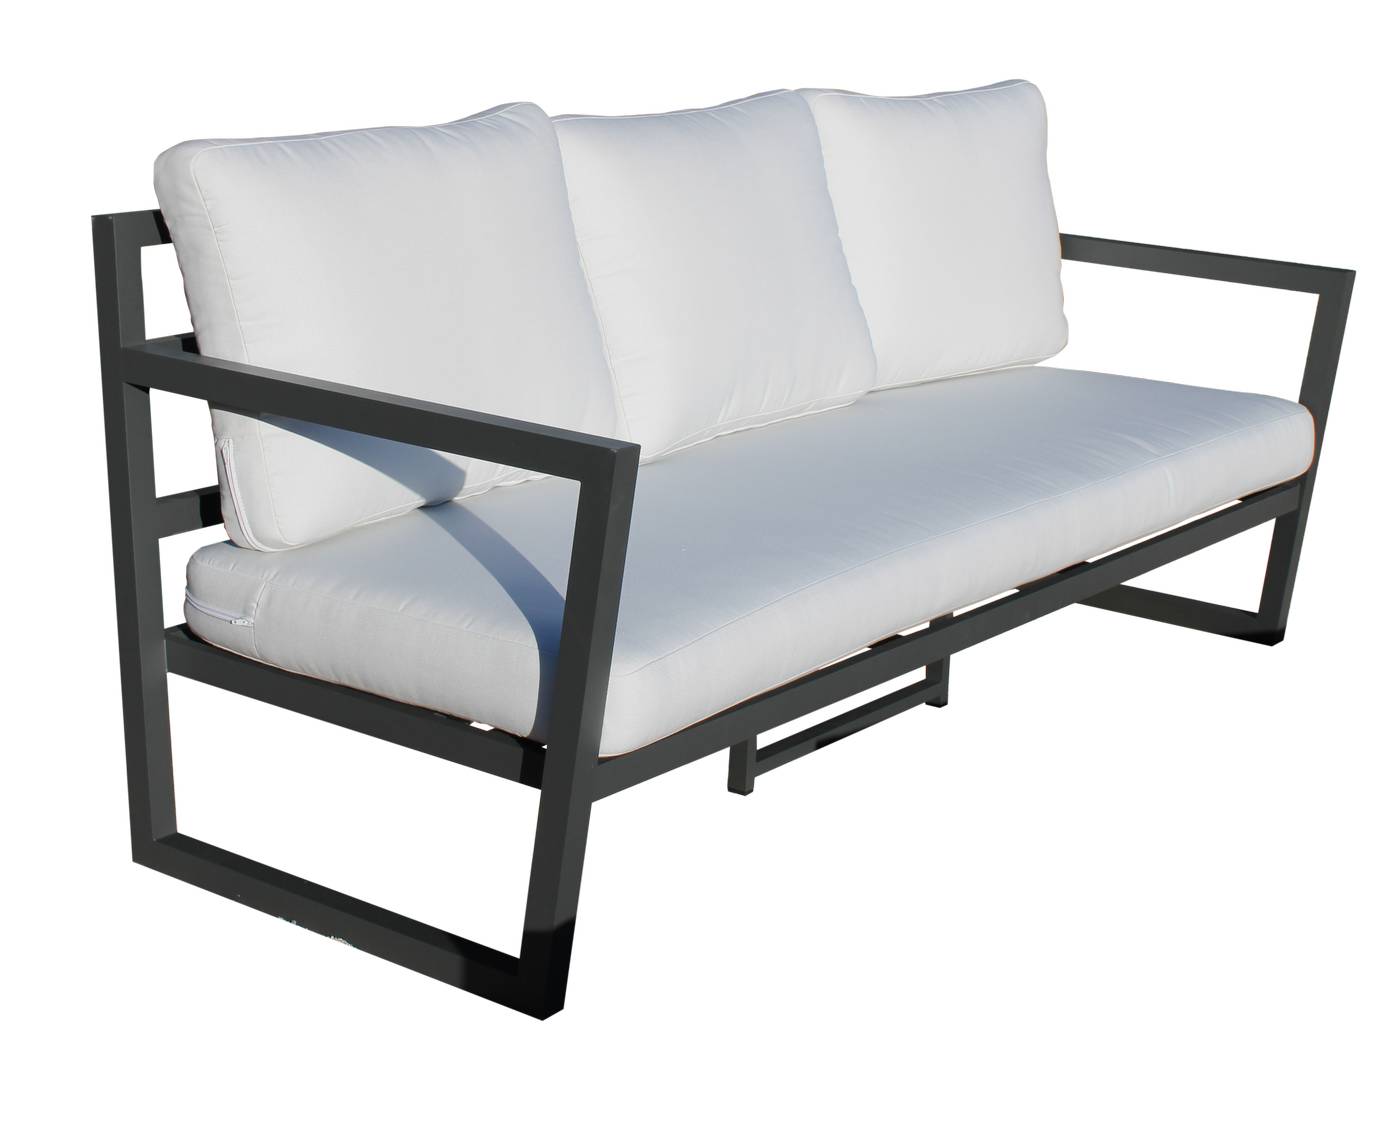 Set Aluminio Piona-10 - Conjunto de aluminio para exterior: sofá 3 plazas + 2 sillones + mesa de centro + 2 taburetes. Disponible en cinco colores diferentes.